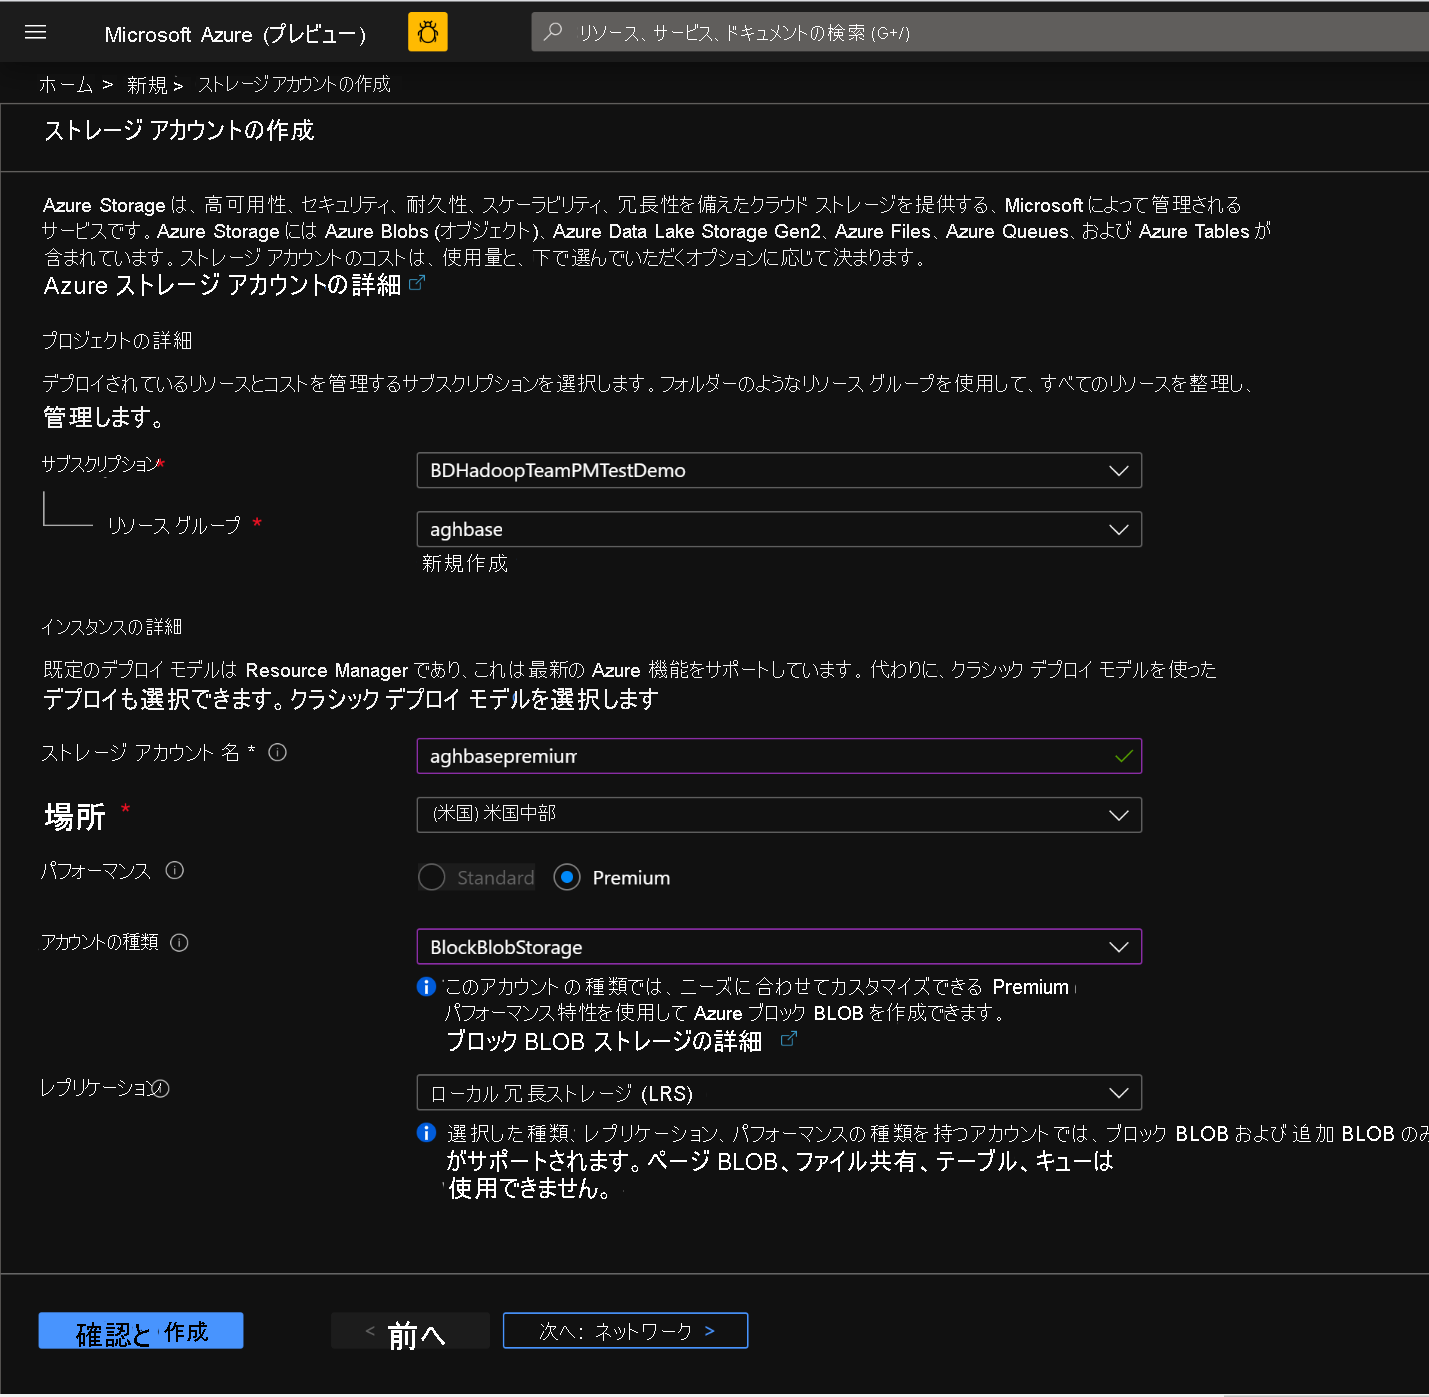 Storage account screen in the Azure Portal.